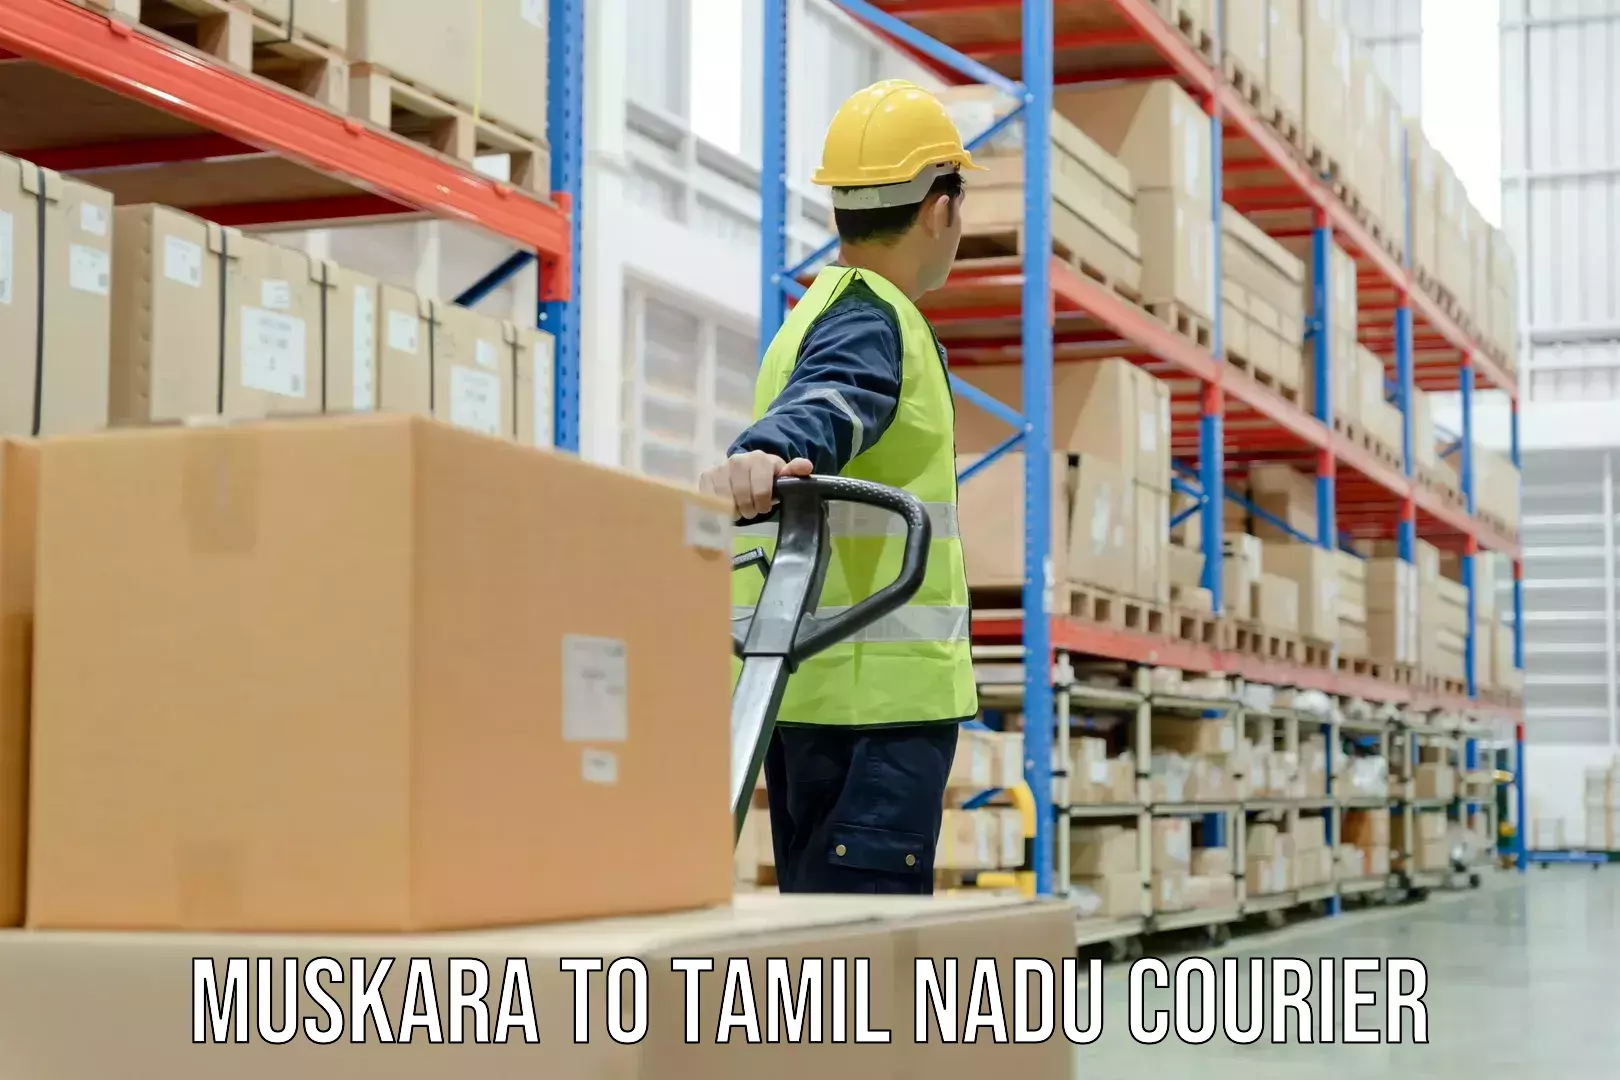 Logistics service provider Muskara to Tamil Nadu